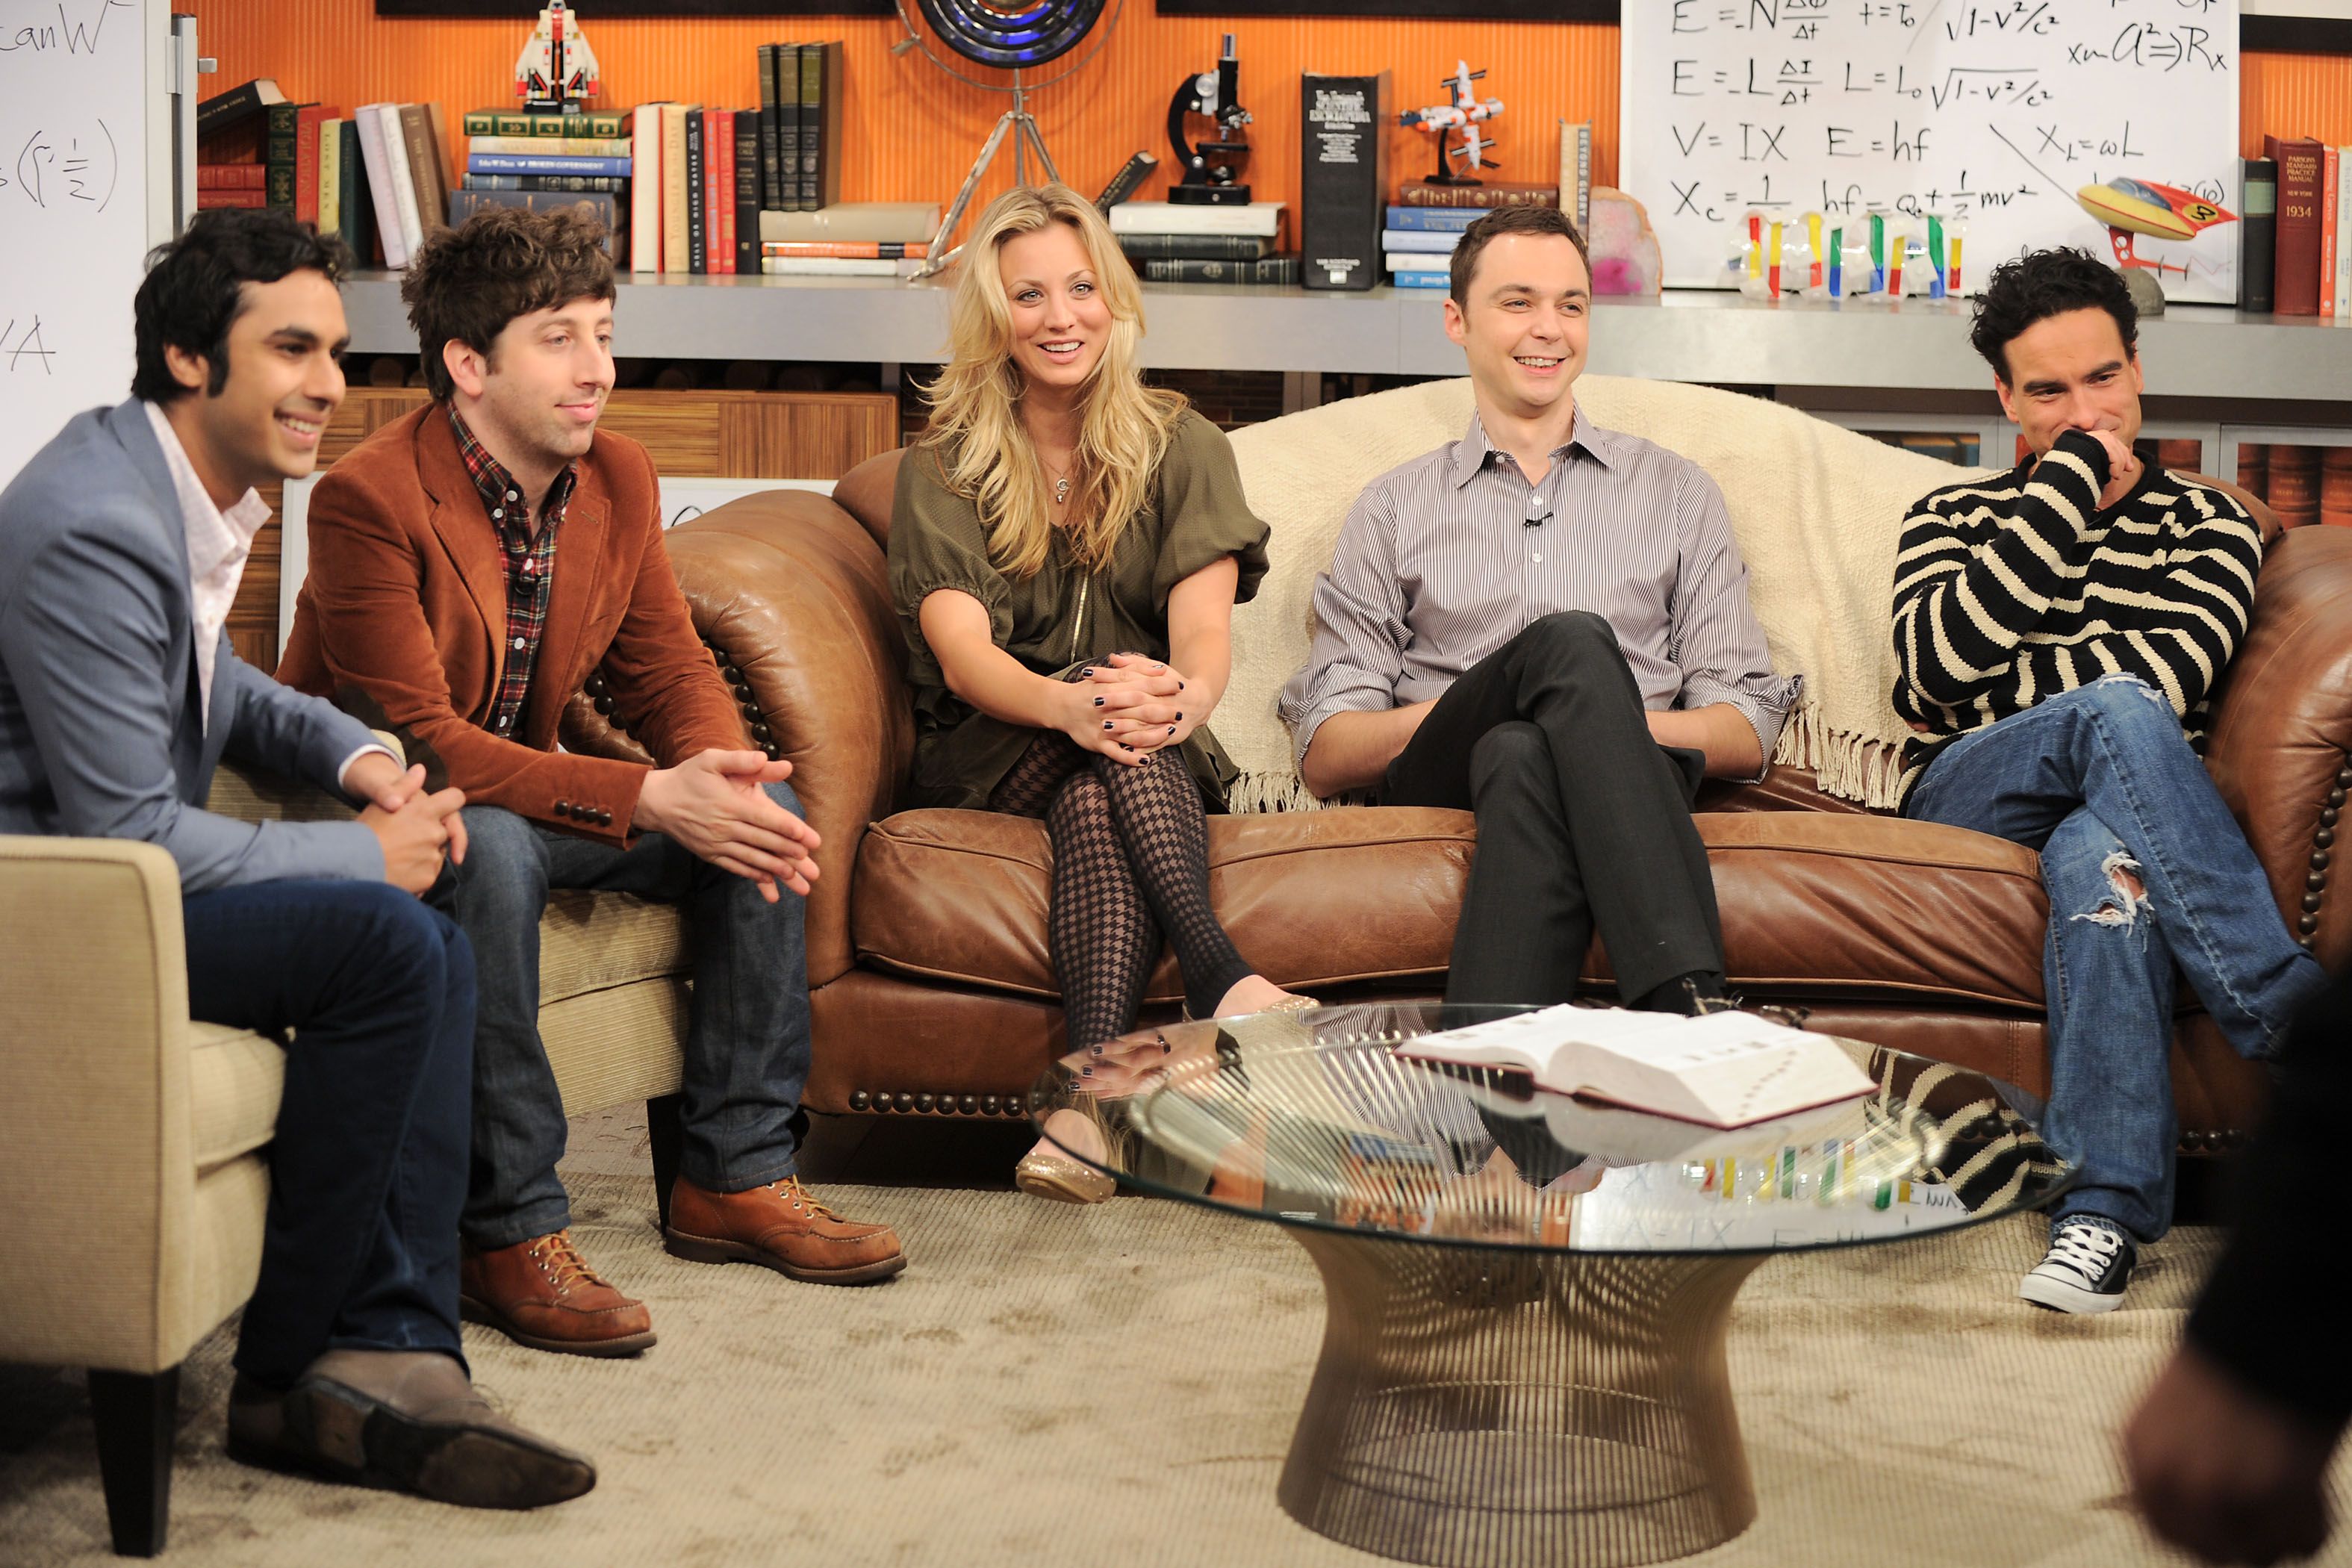 Jim Parsons temia que sua saída de The Big Bang Theory também levasse Mayim Bialik a deixar o programa se continuasse